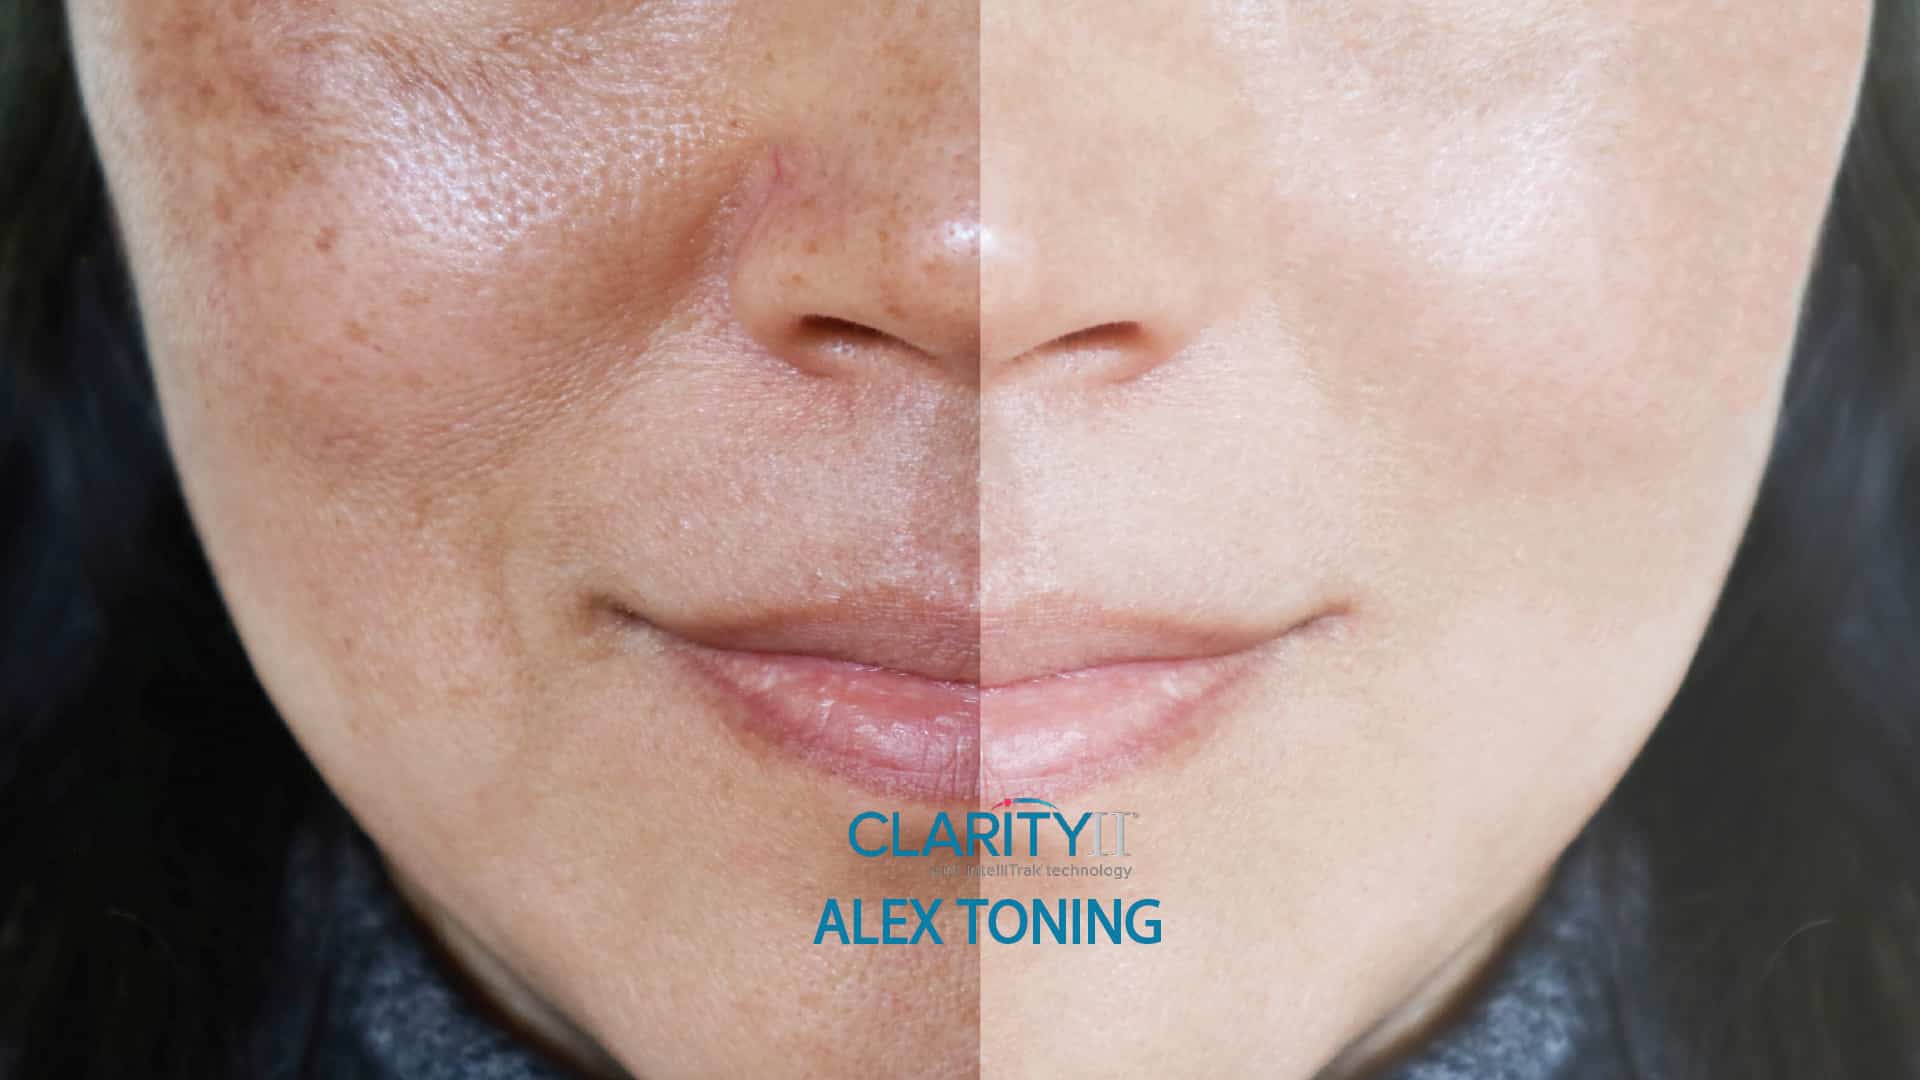 Clarity II™ Alex Toning